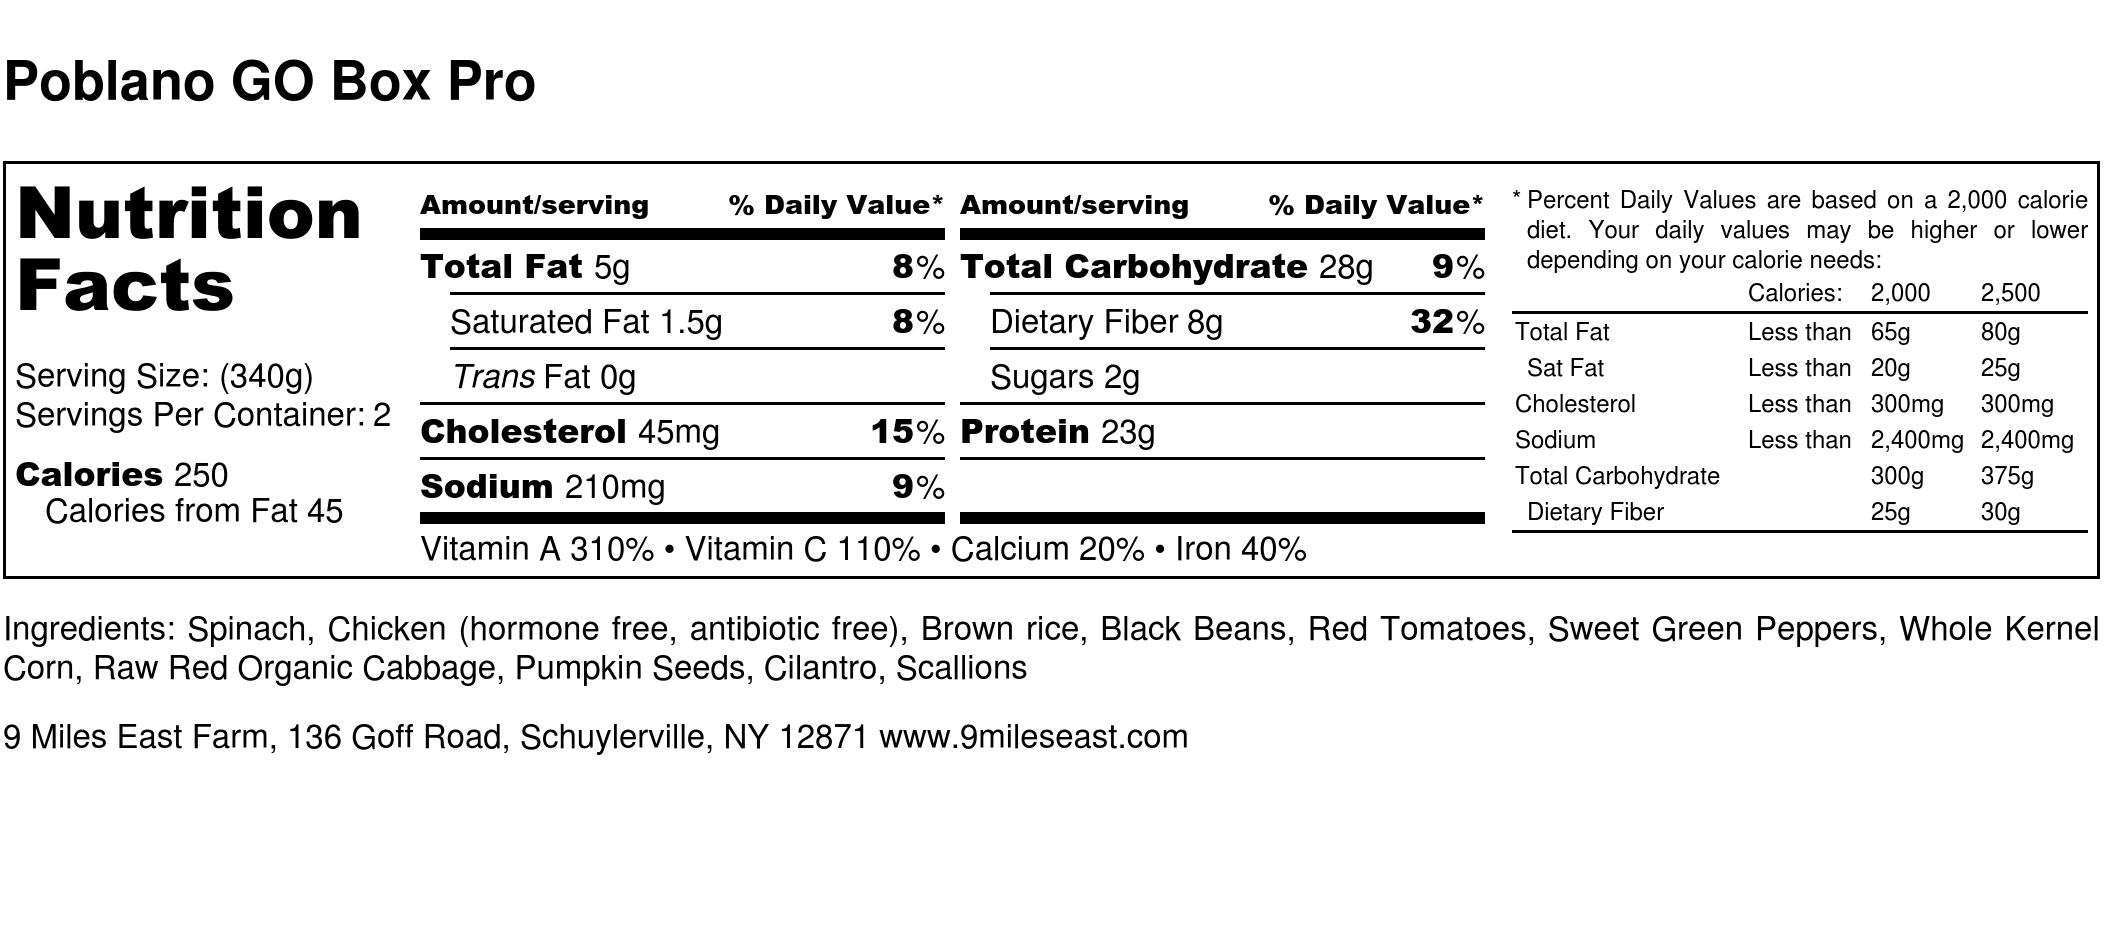 Poblano GO Box Pro - Nutrition Label.jpg